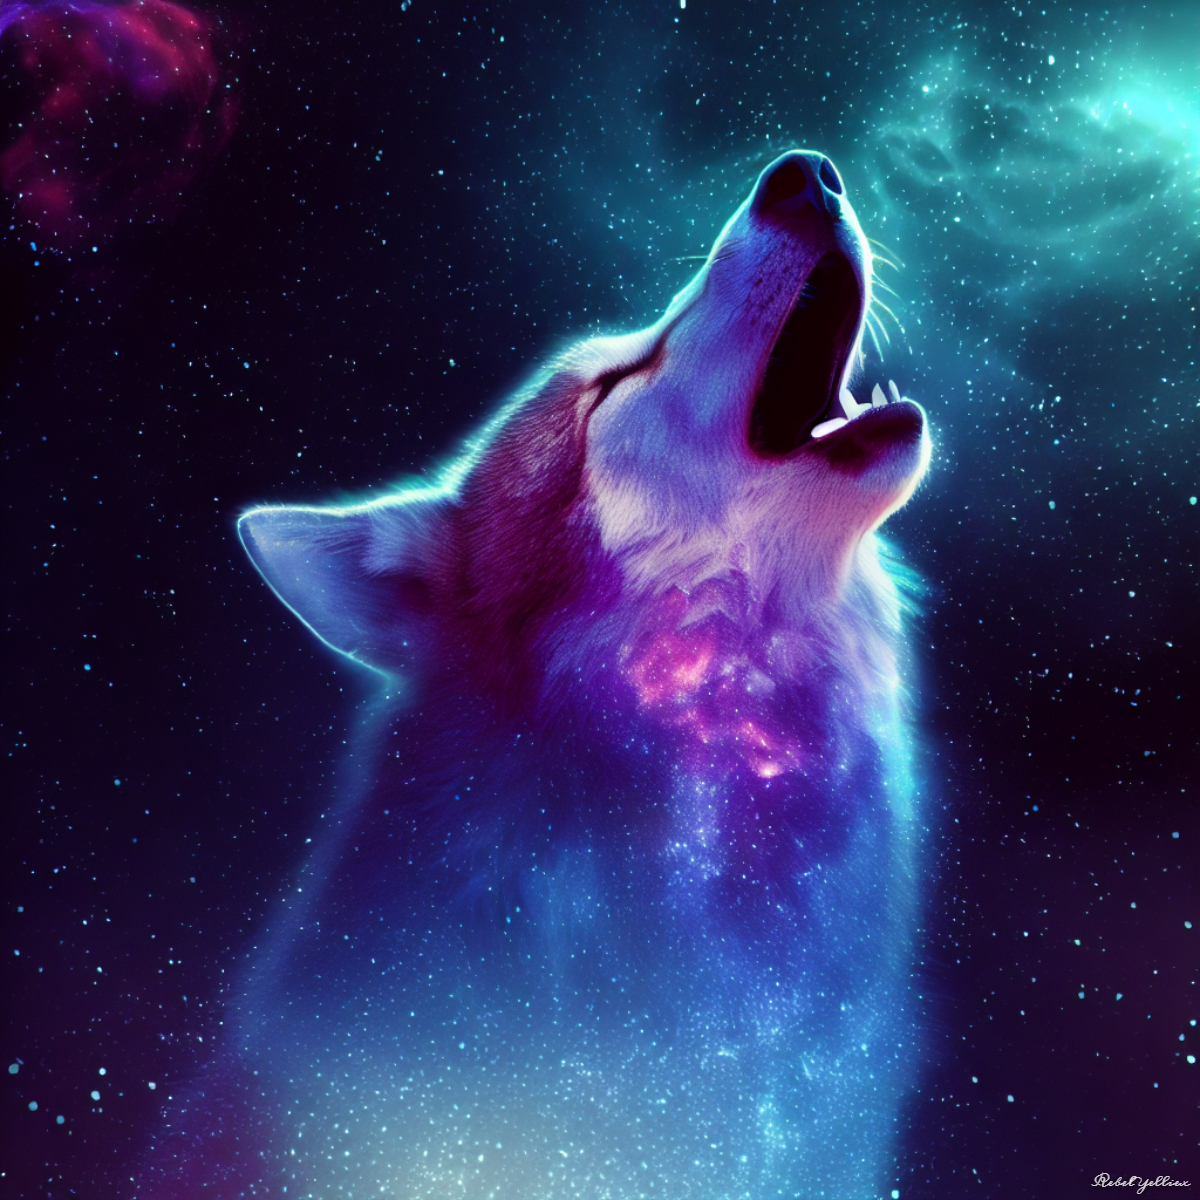 Galaxy wolf howling by xRebelYellx on DeviantArt